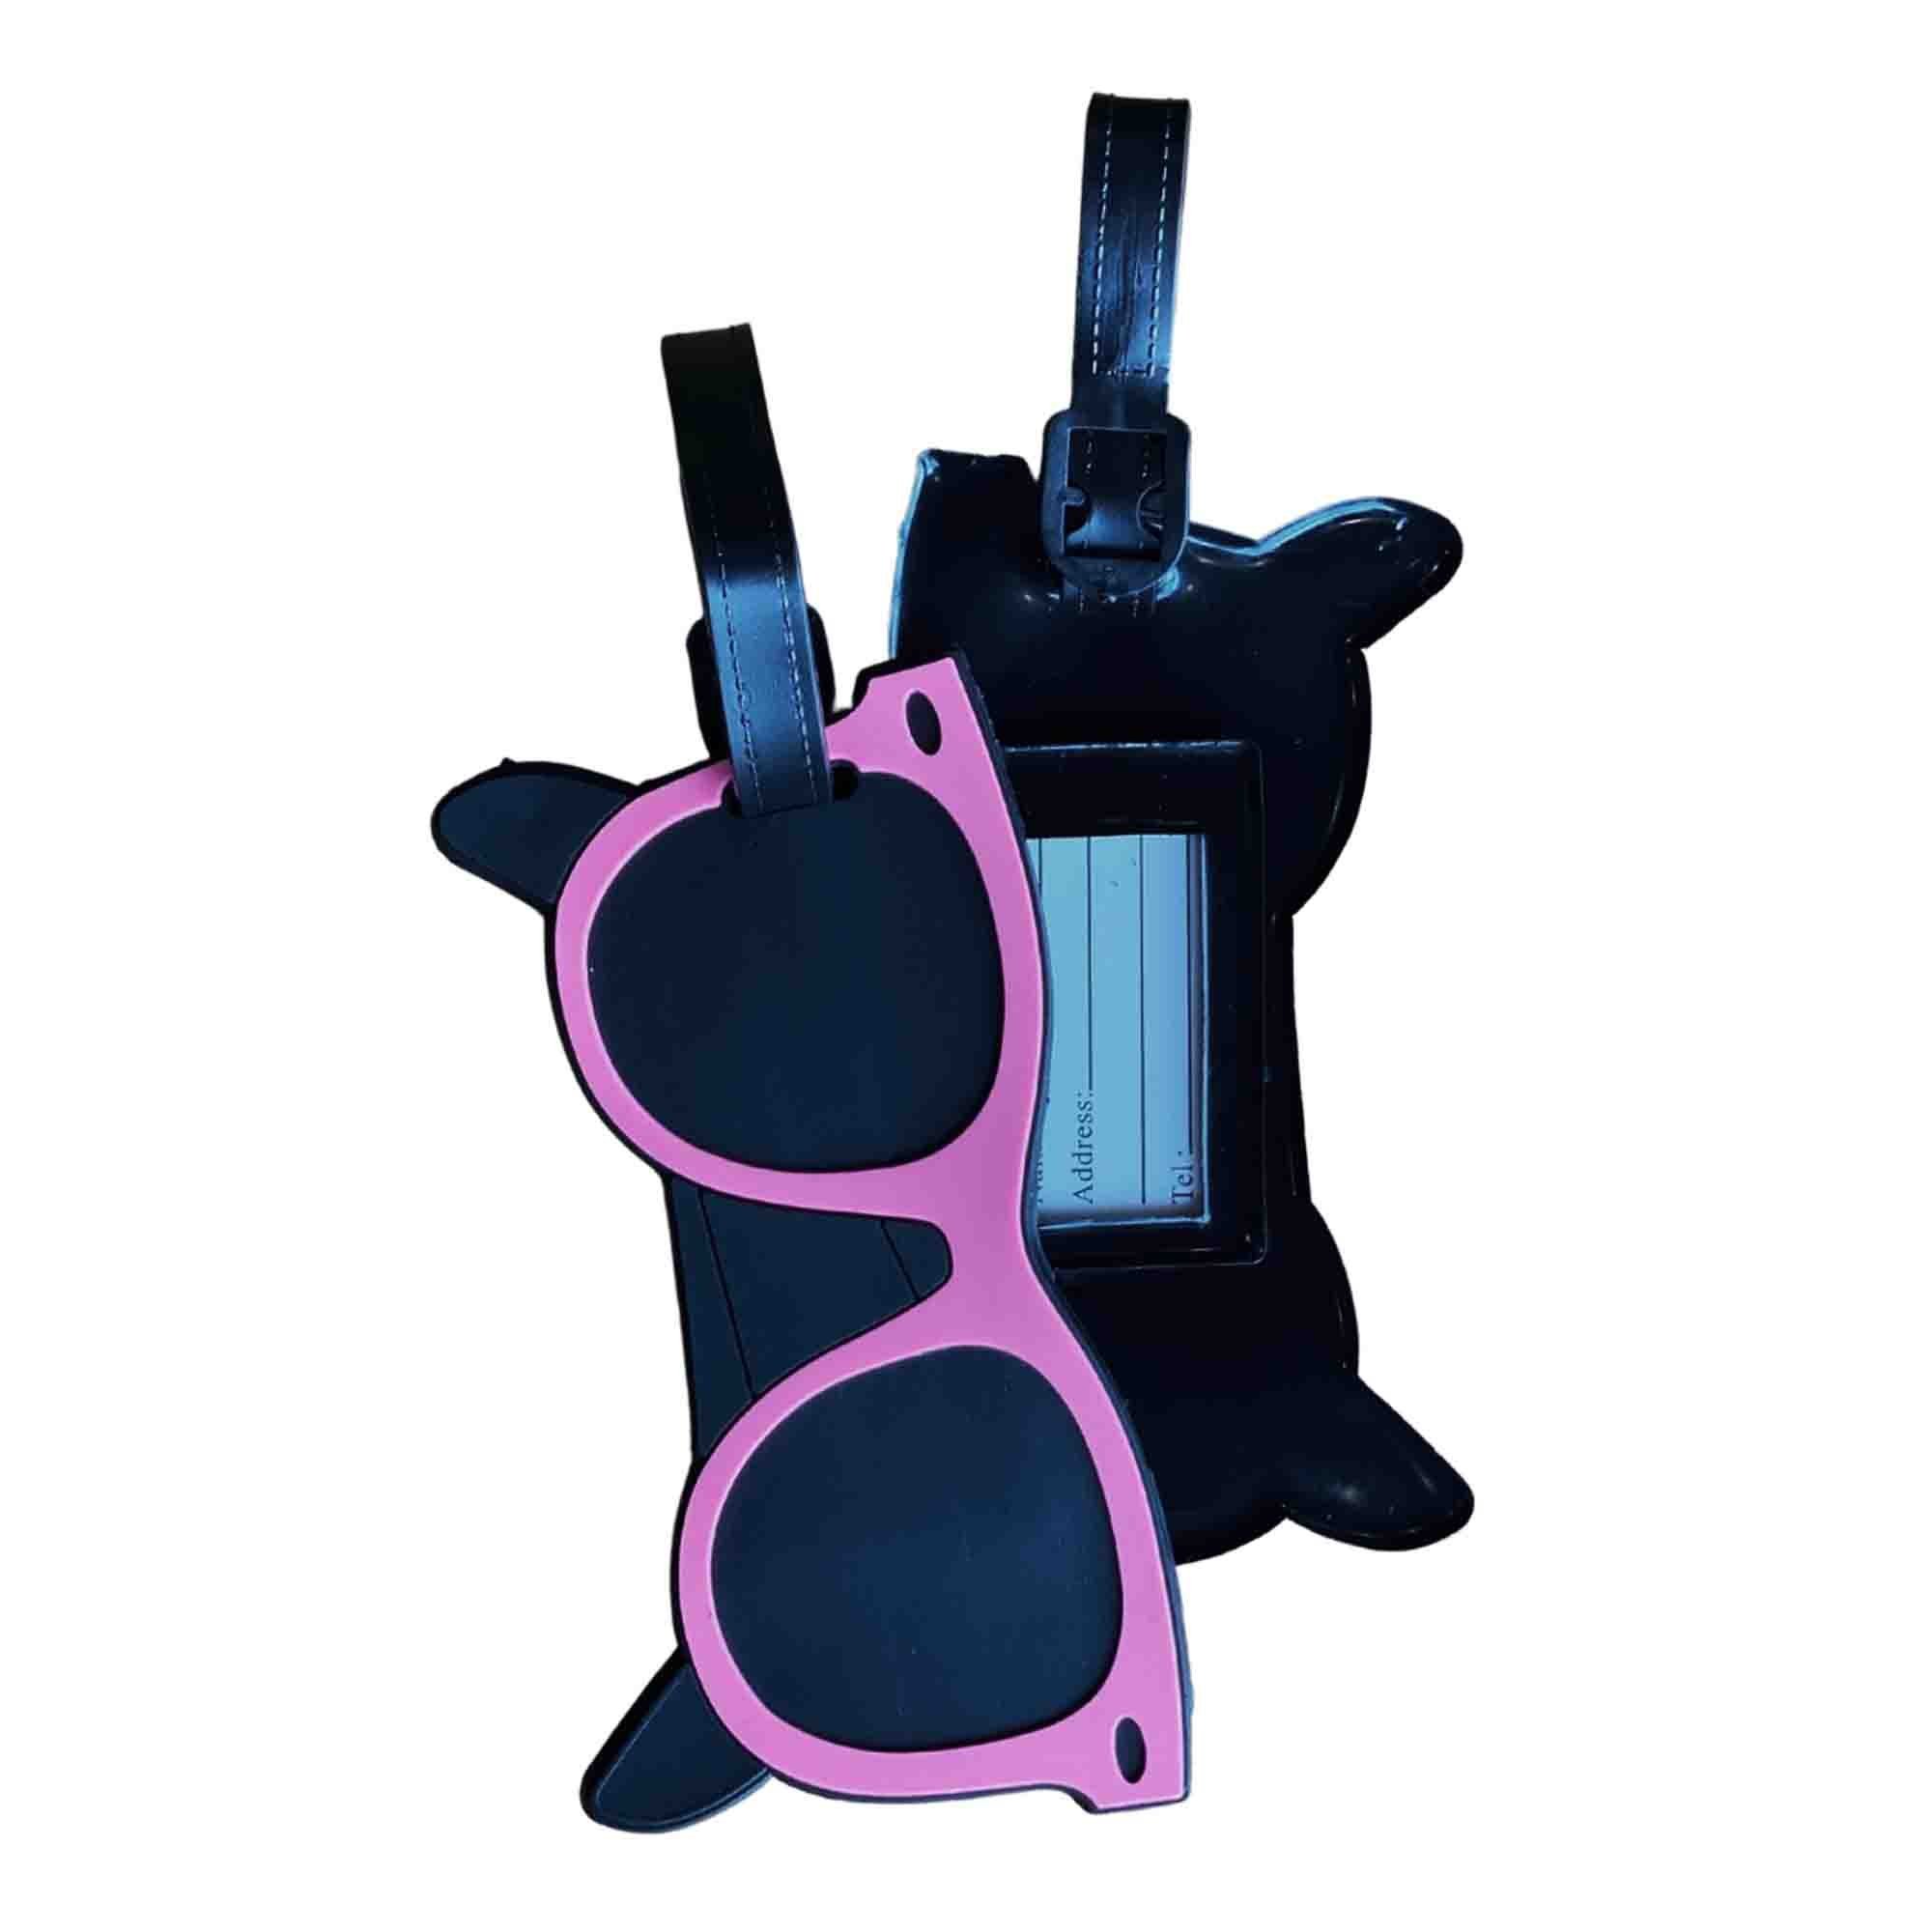 Tag de Mala - Pink Sunglasses Meu Kit de Viagem - 2